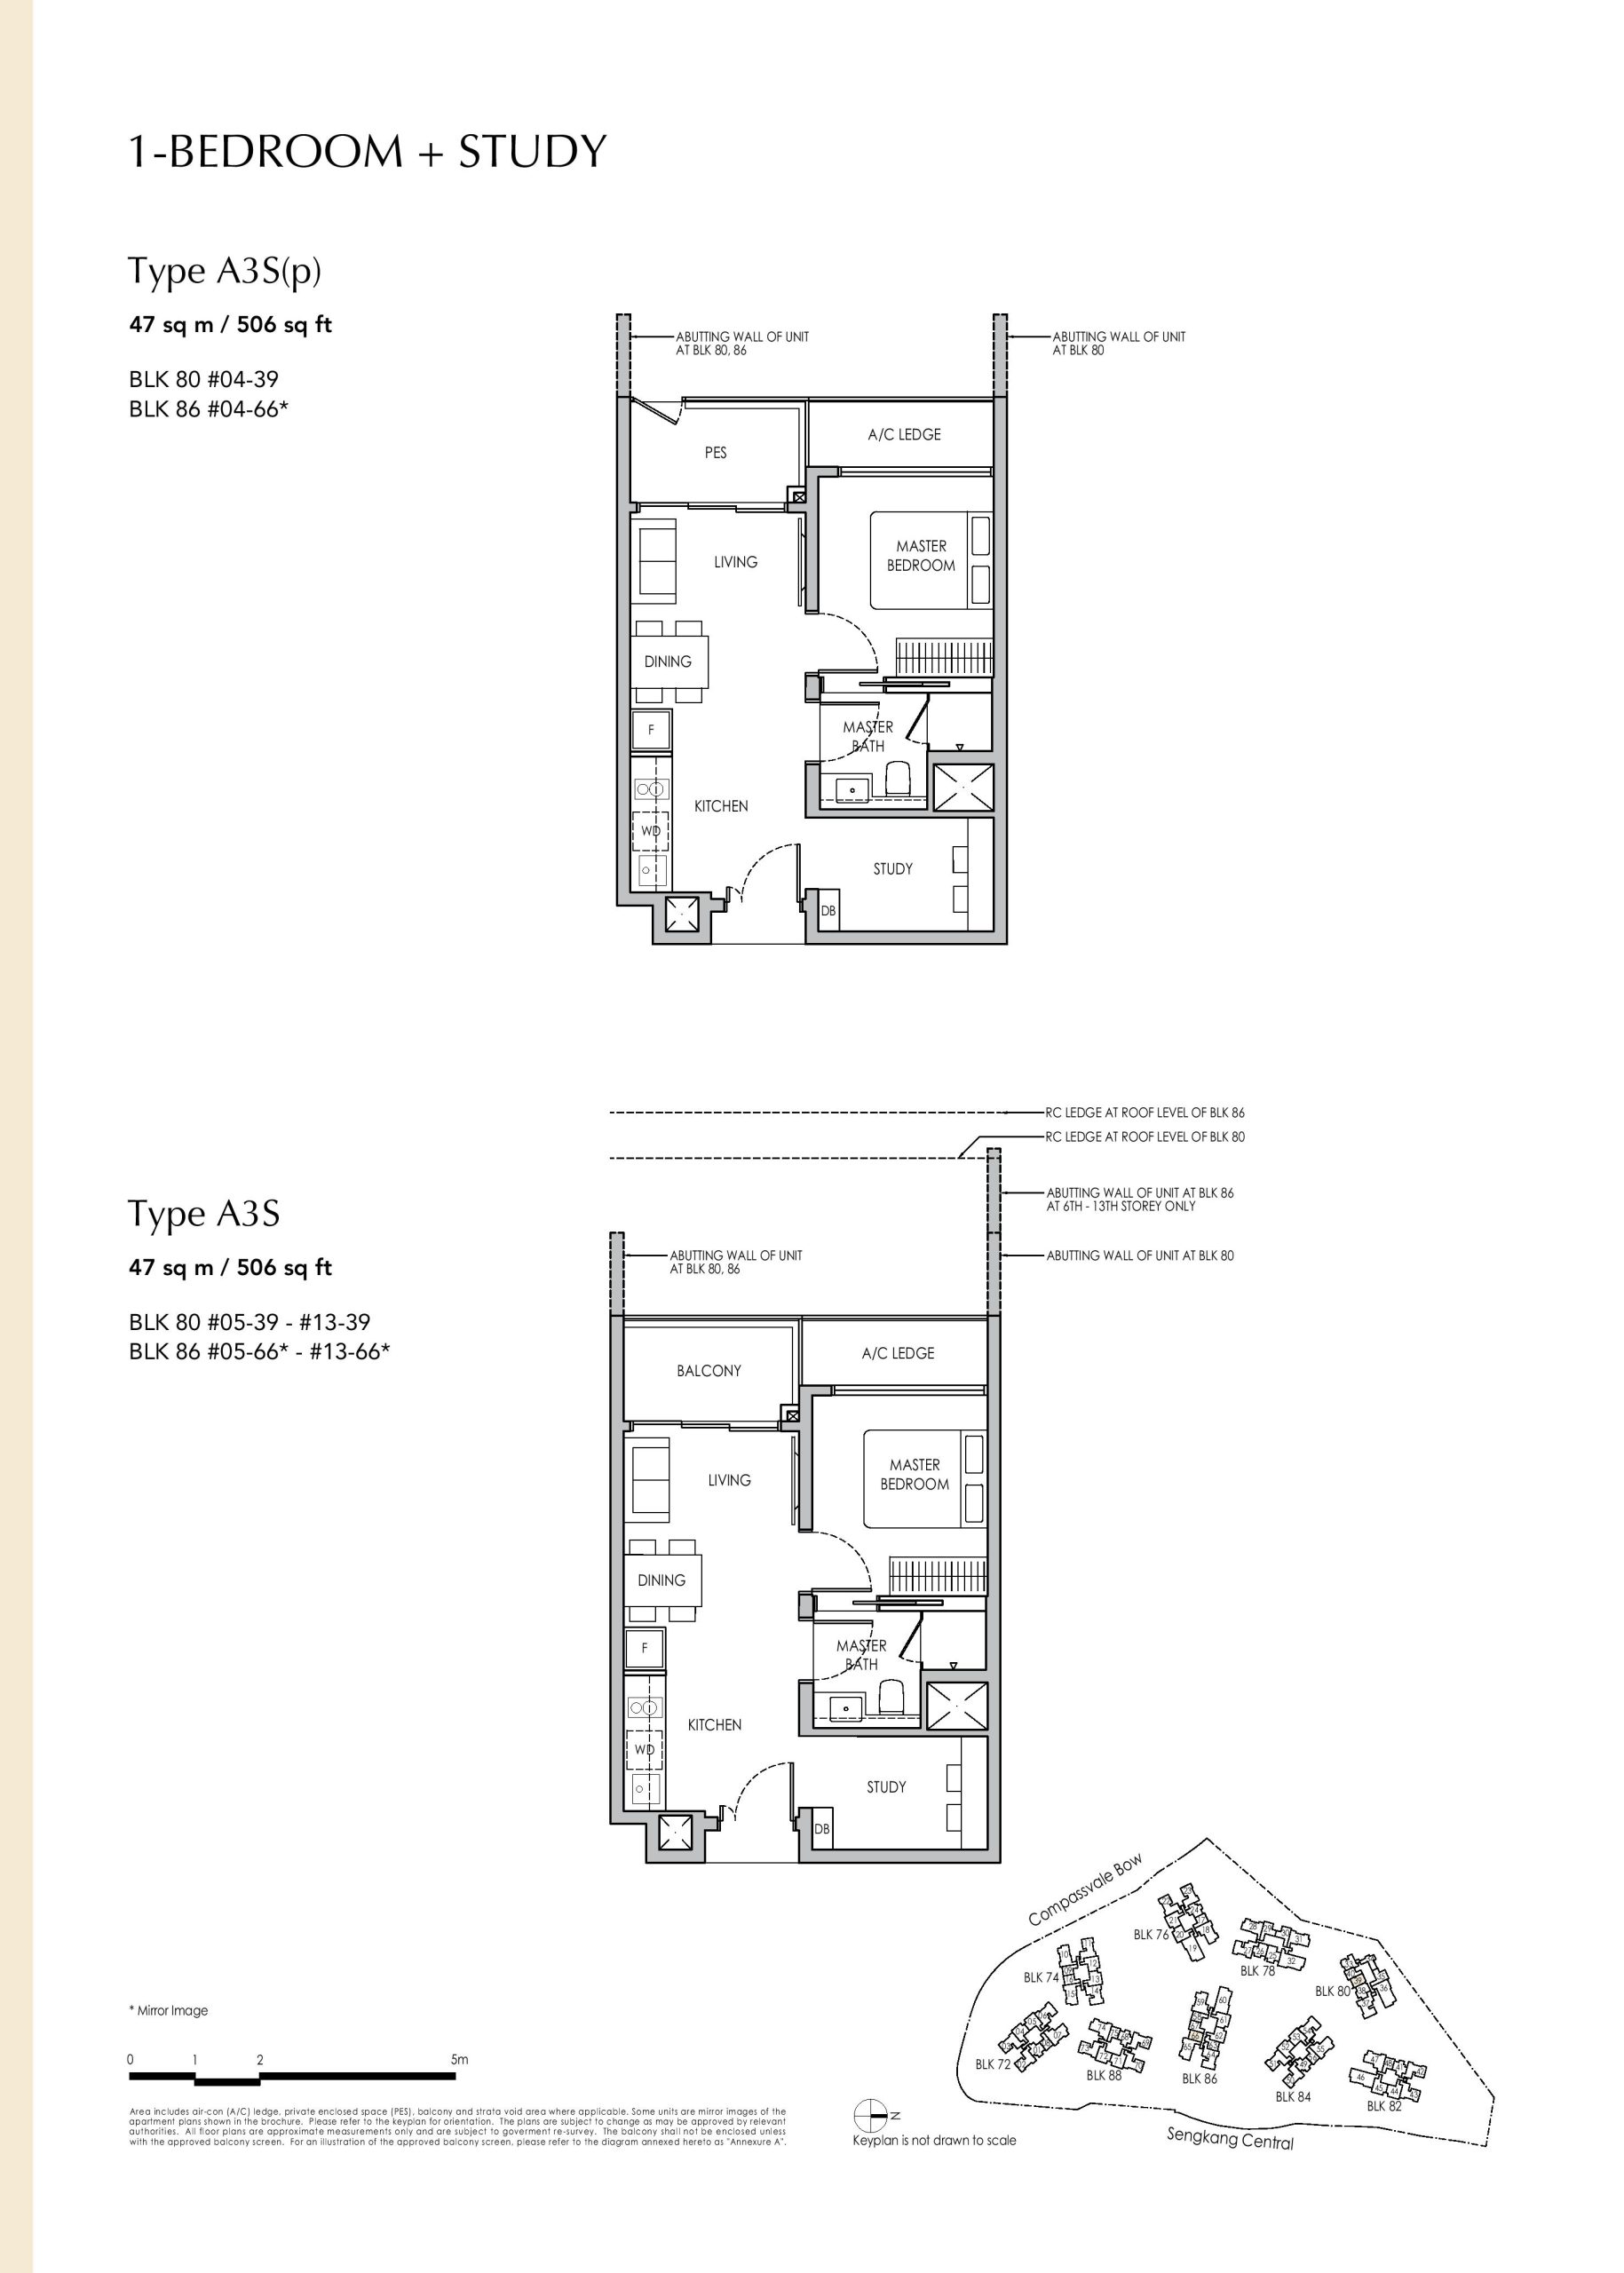 Sengkang Grand Residences 1 Bedroom + Study Type A3S(p), A3S Floor Plans